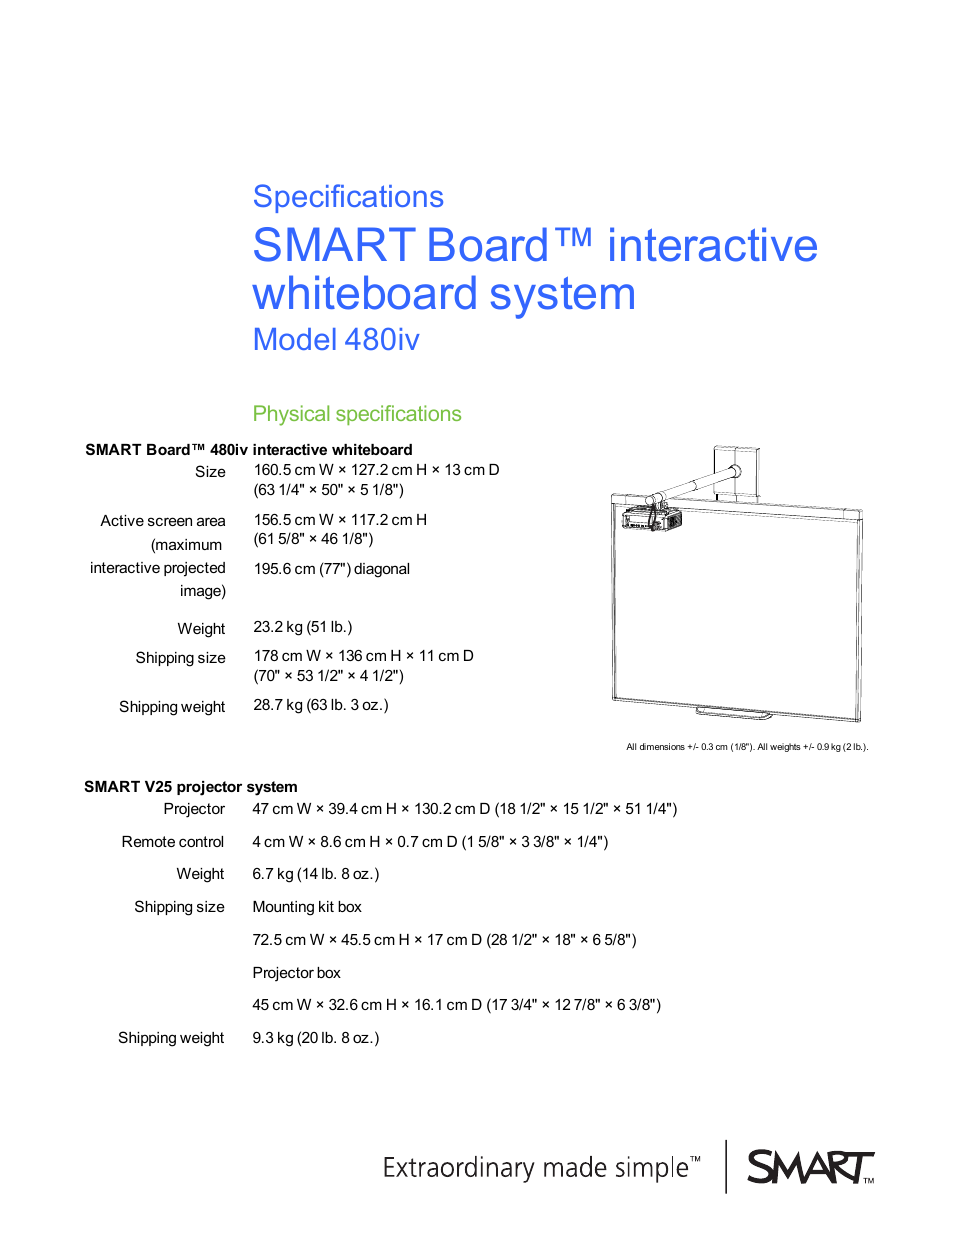 SMART Board Interactive Whiteboard System 480iv